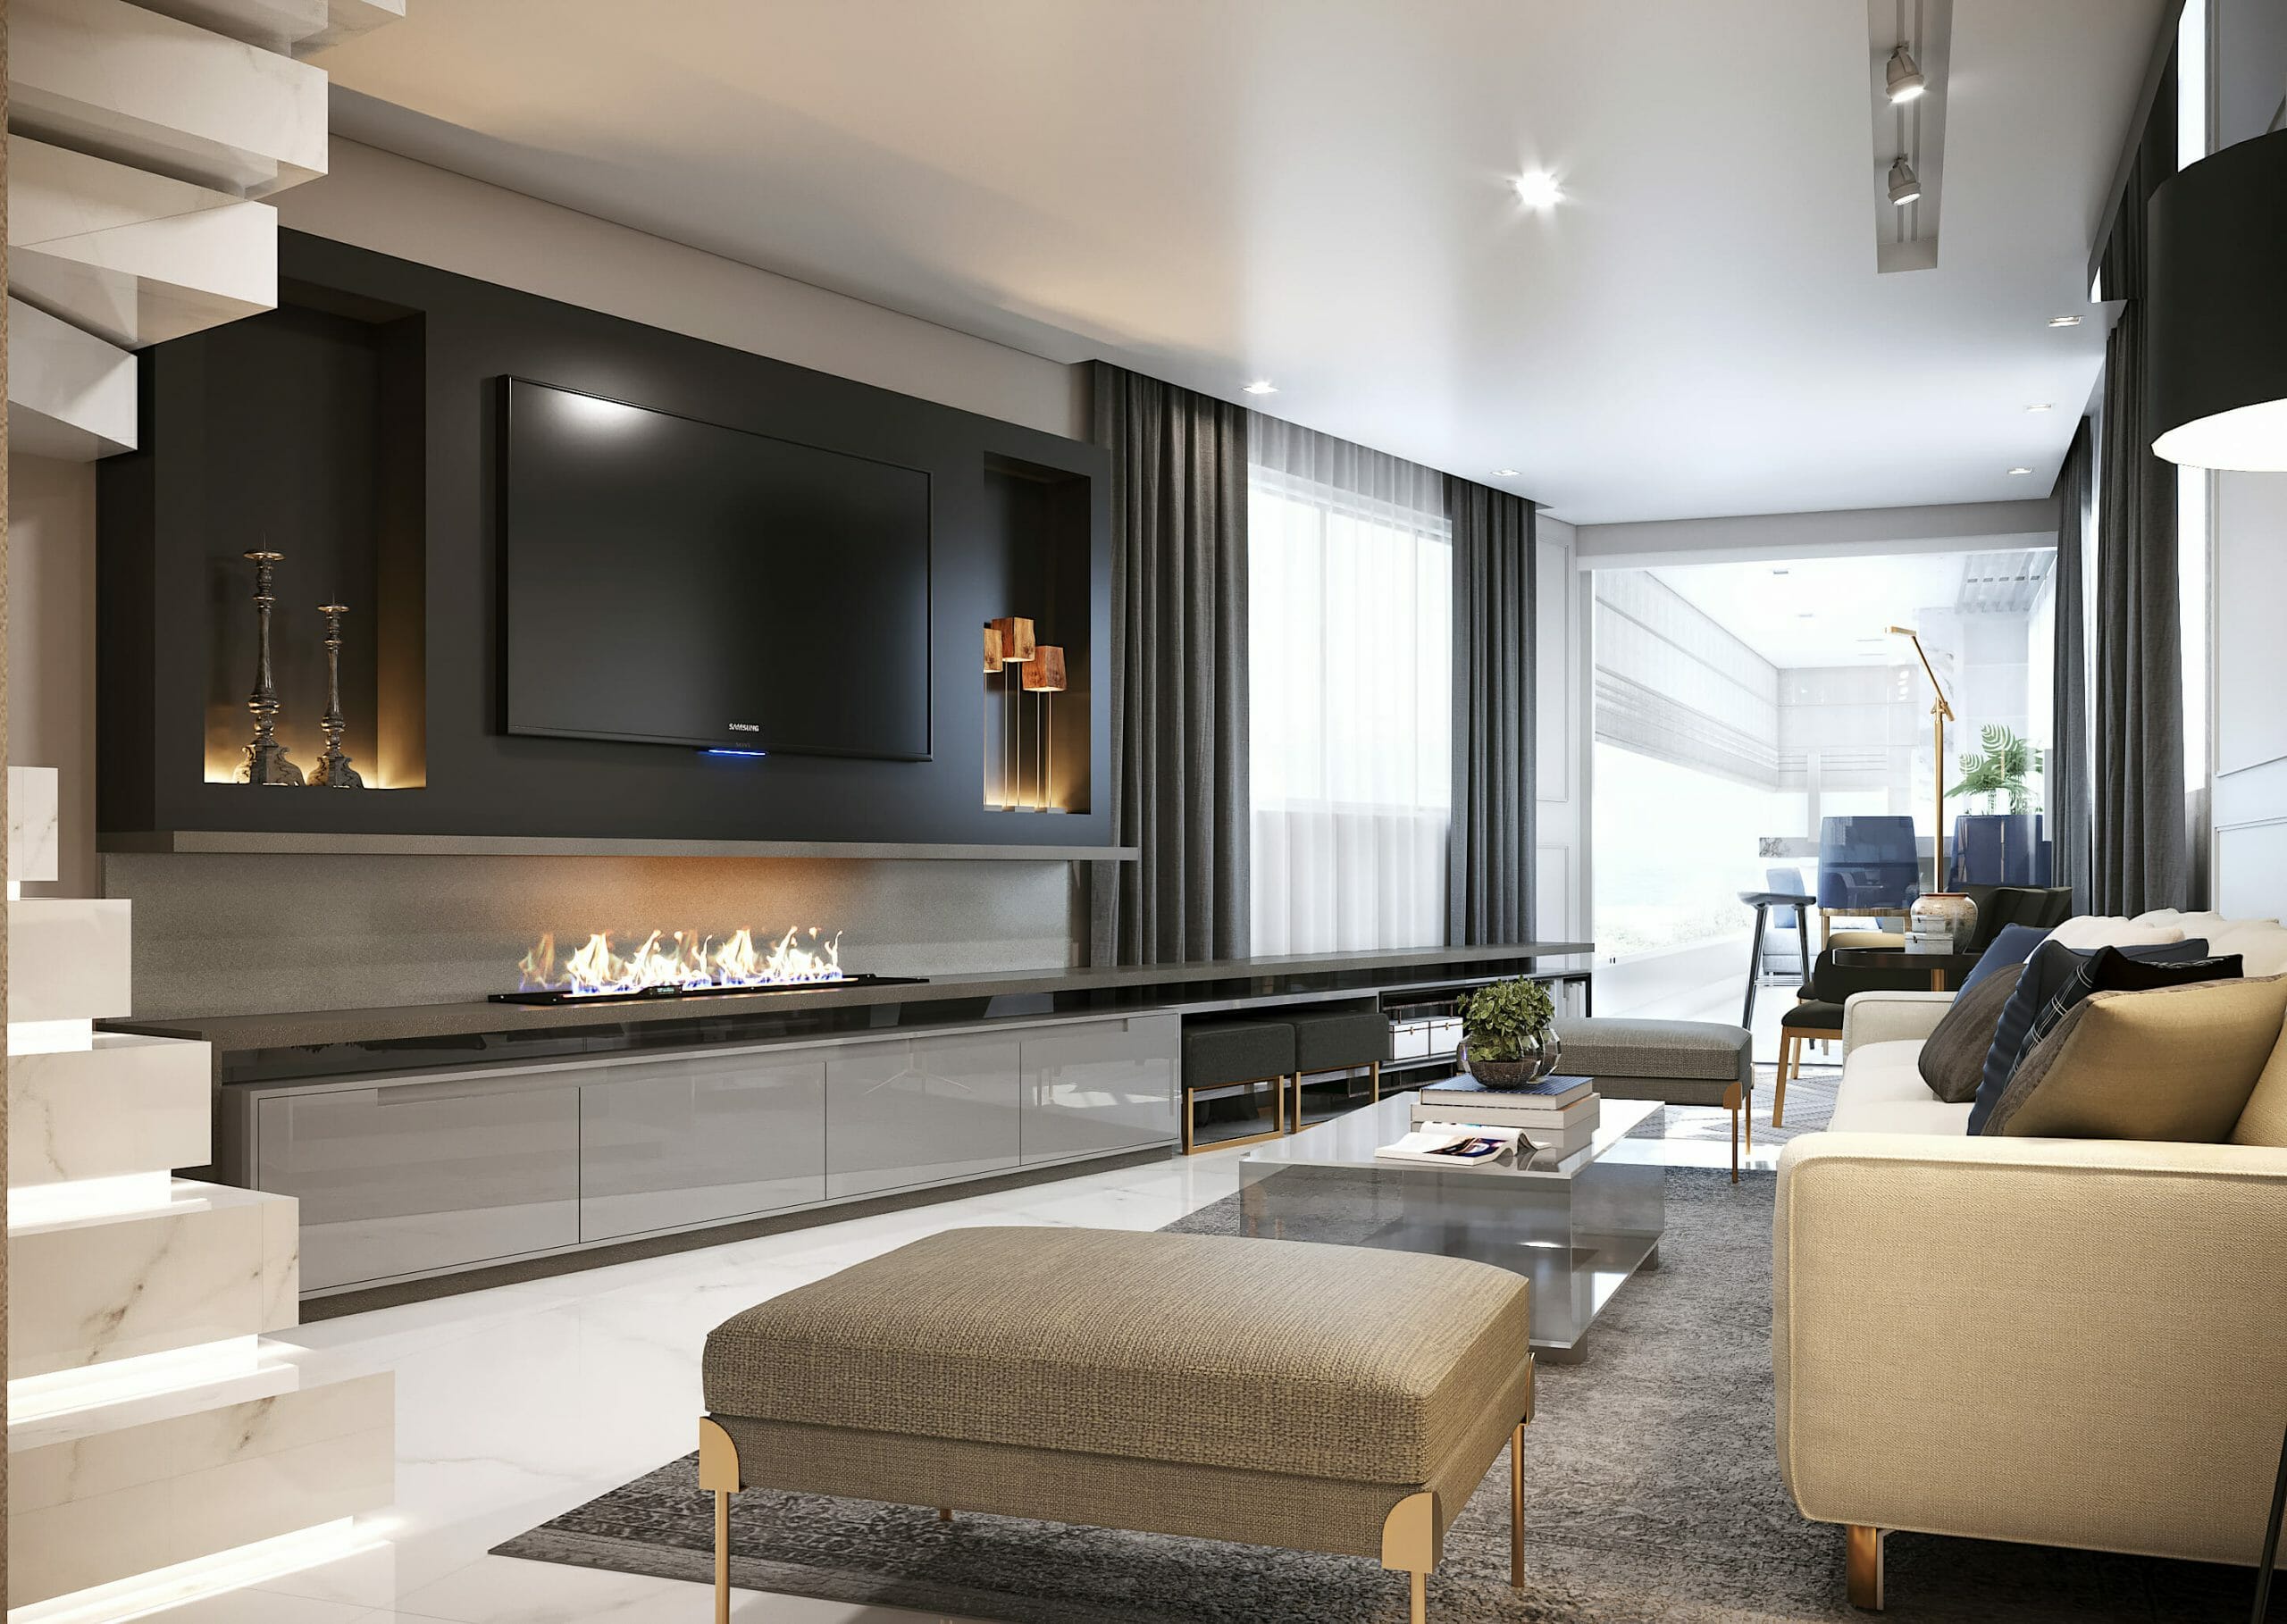 Modern Interior Design Ideas For Apartments - Home Design Ideas